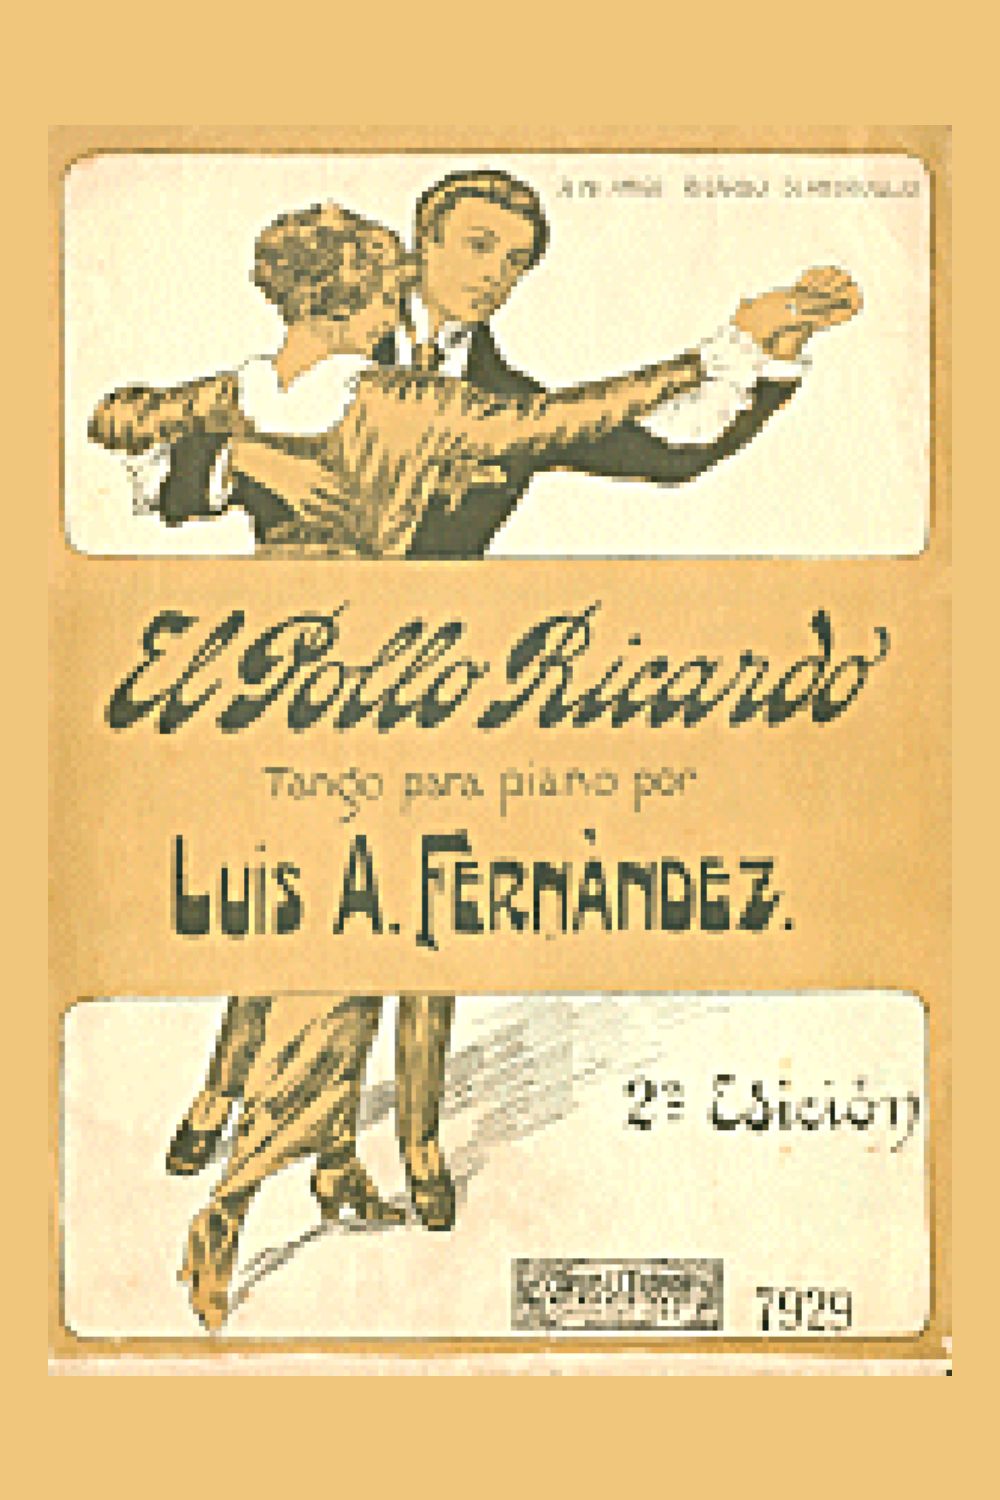 "El Pollo Ricardo", Argentine Tango music sheet cover.